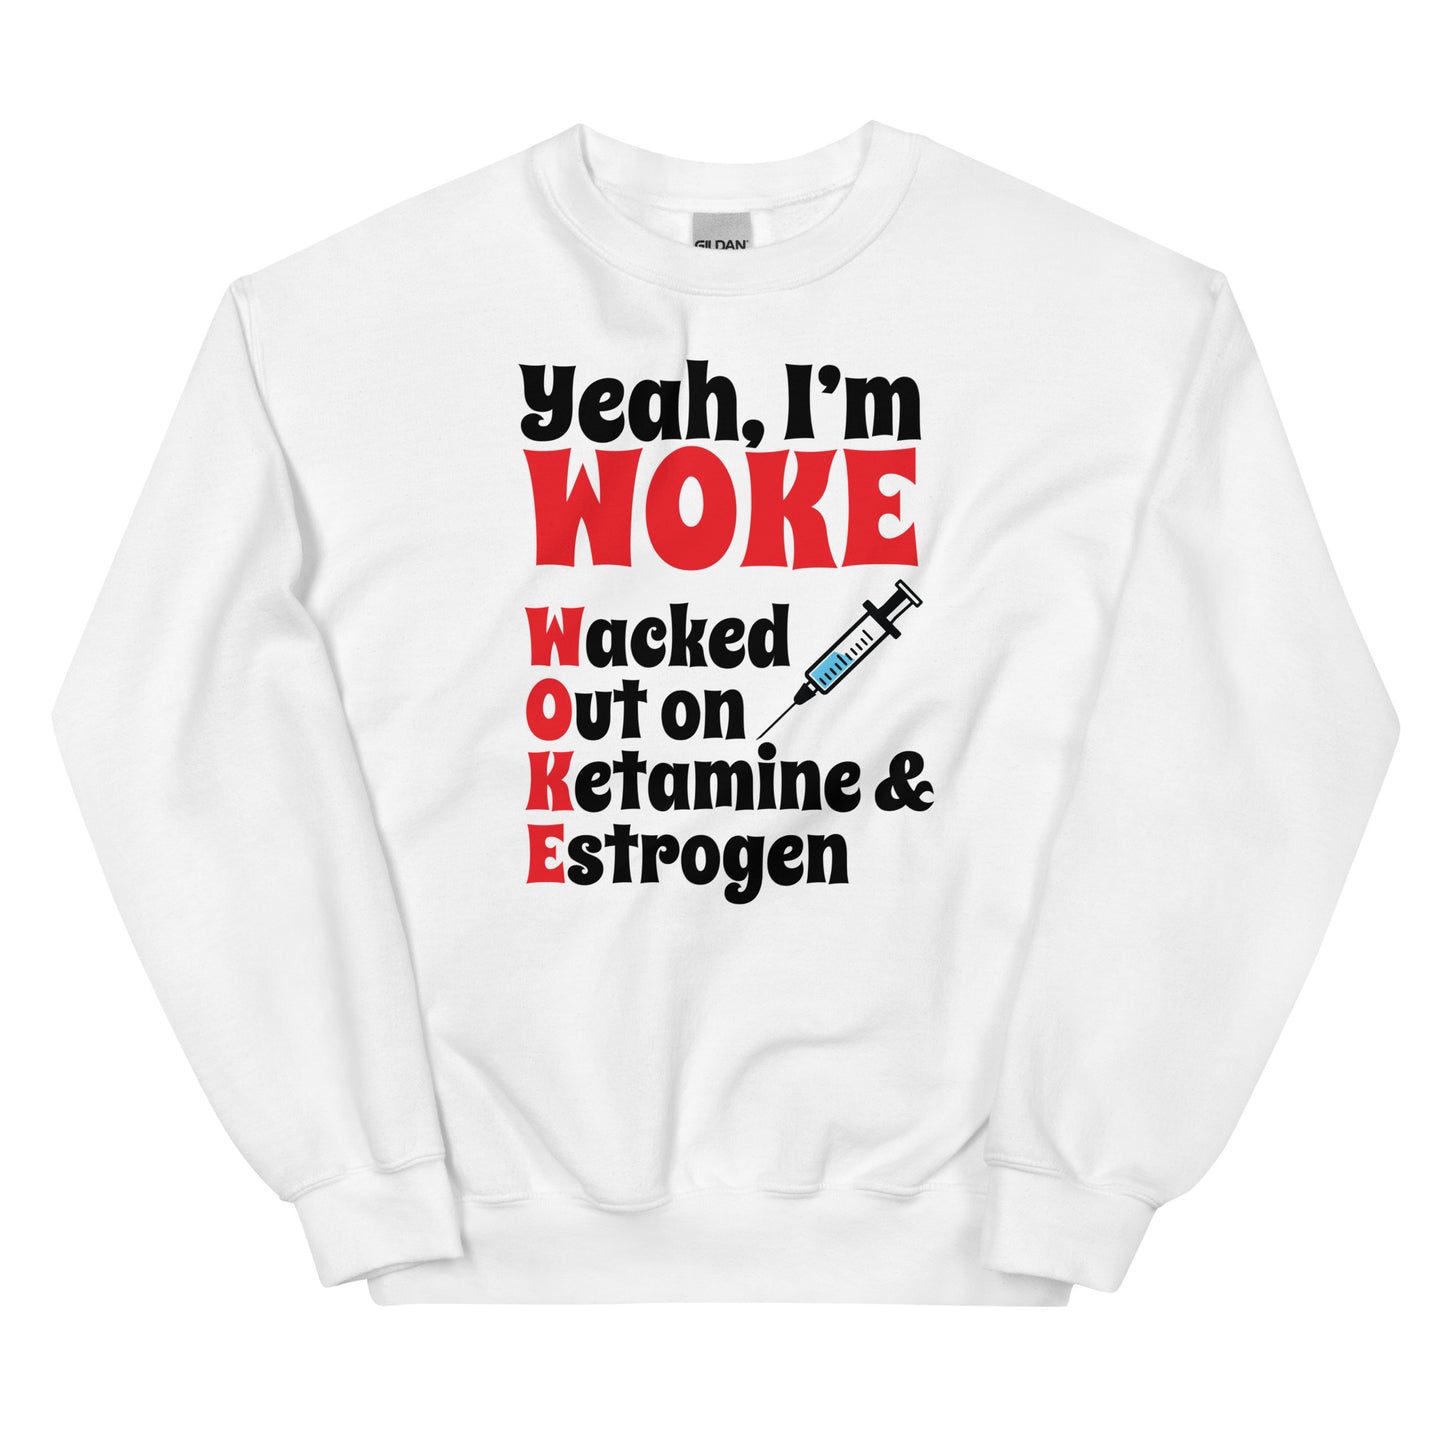 Yeah I'm Woke (Waked Out on Ketamine & Estrogen) Unisex Sweatshirt